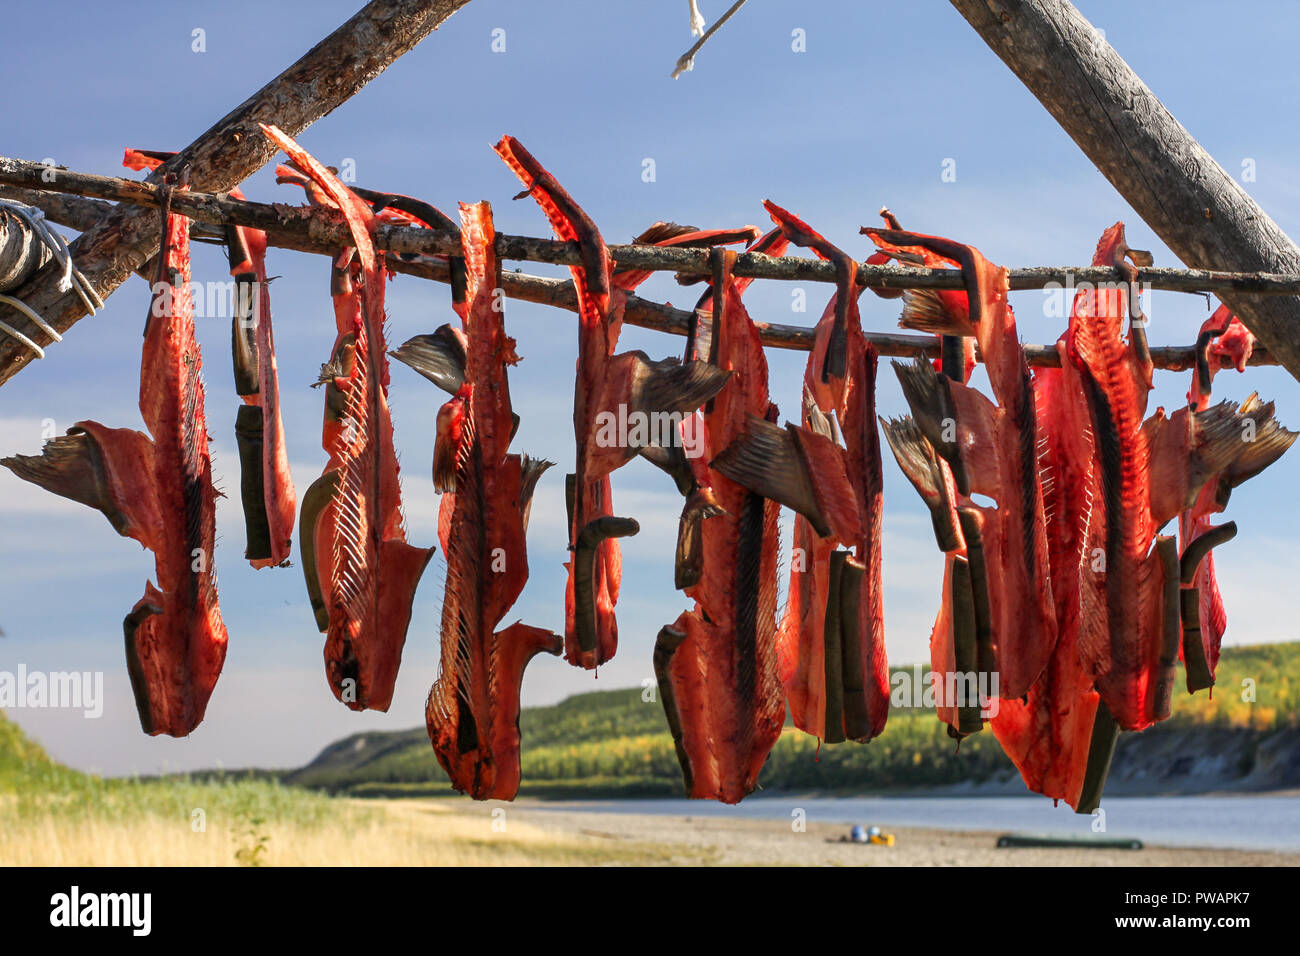 Fish drying rack alaska hi-res stock photography and images - Alamy